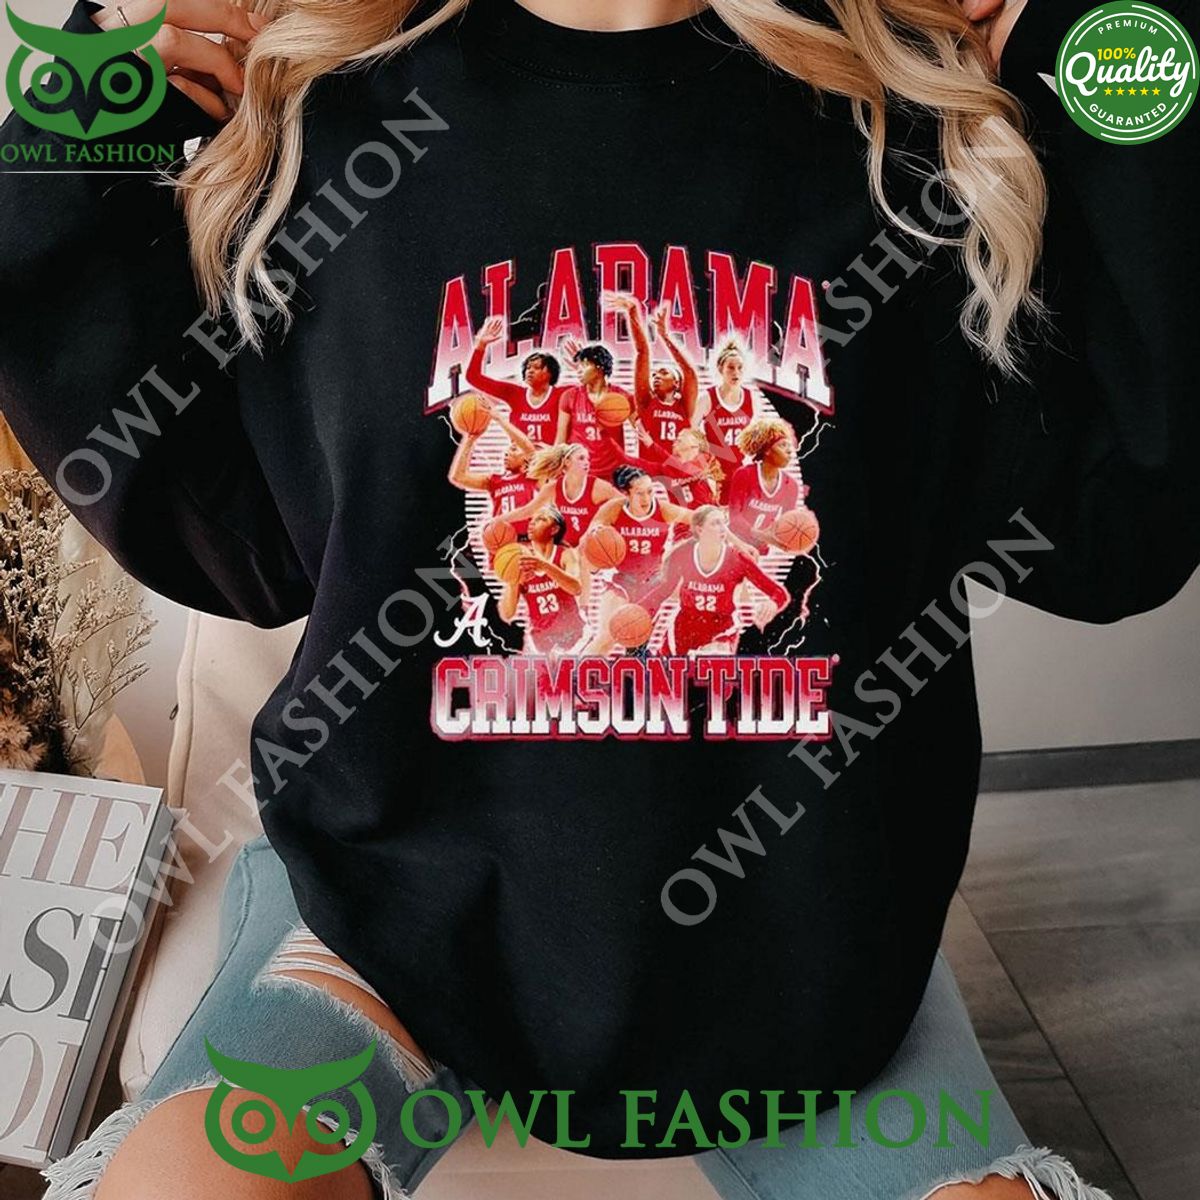 2023 2024 Alabama Crimson Tide Ncaa Women's Basketball Post Season Sweatshirt